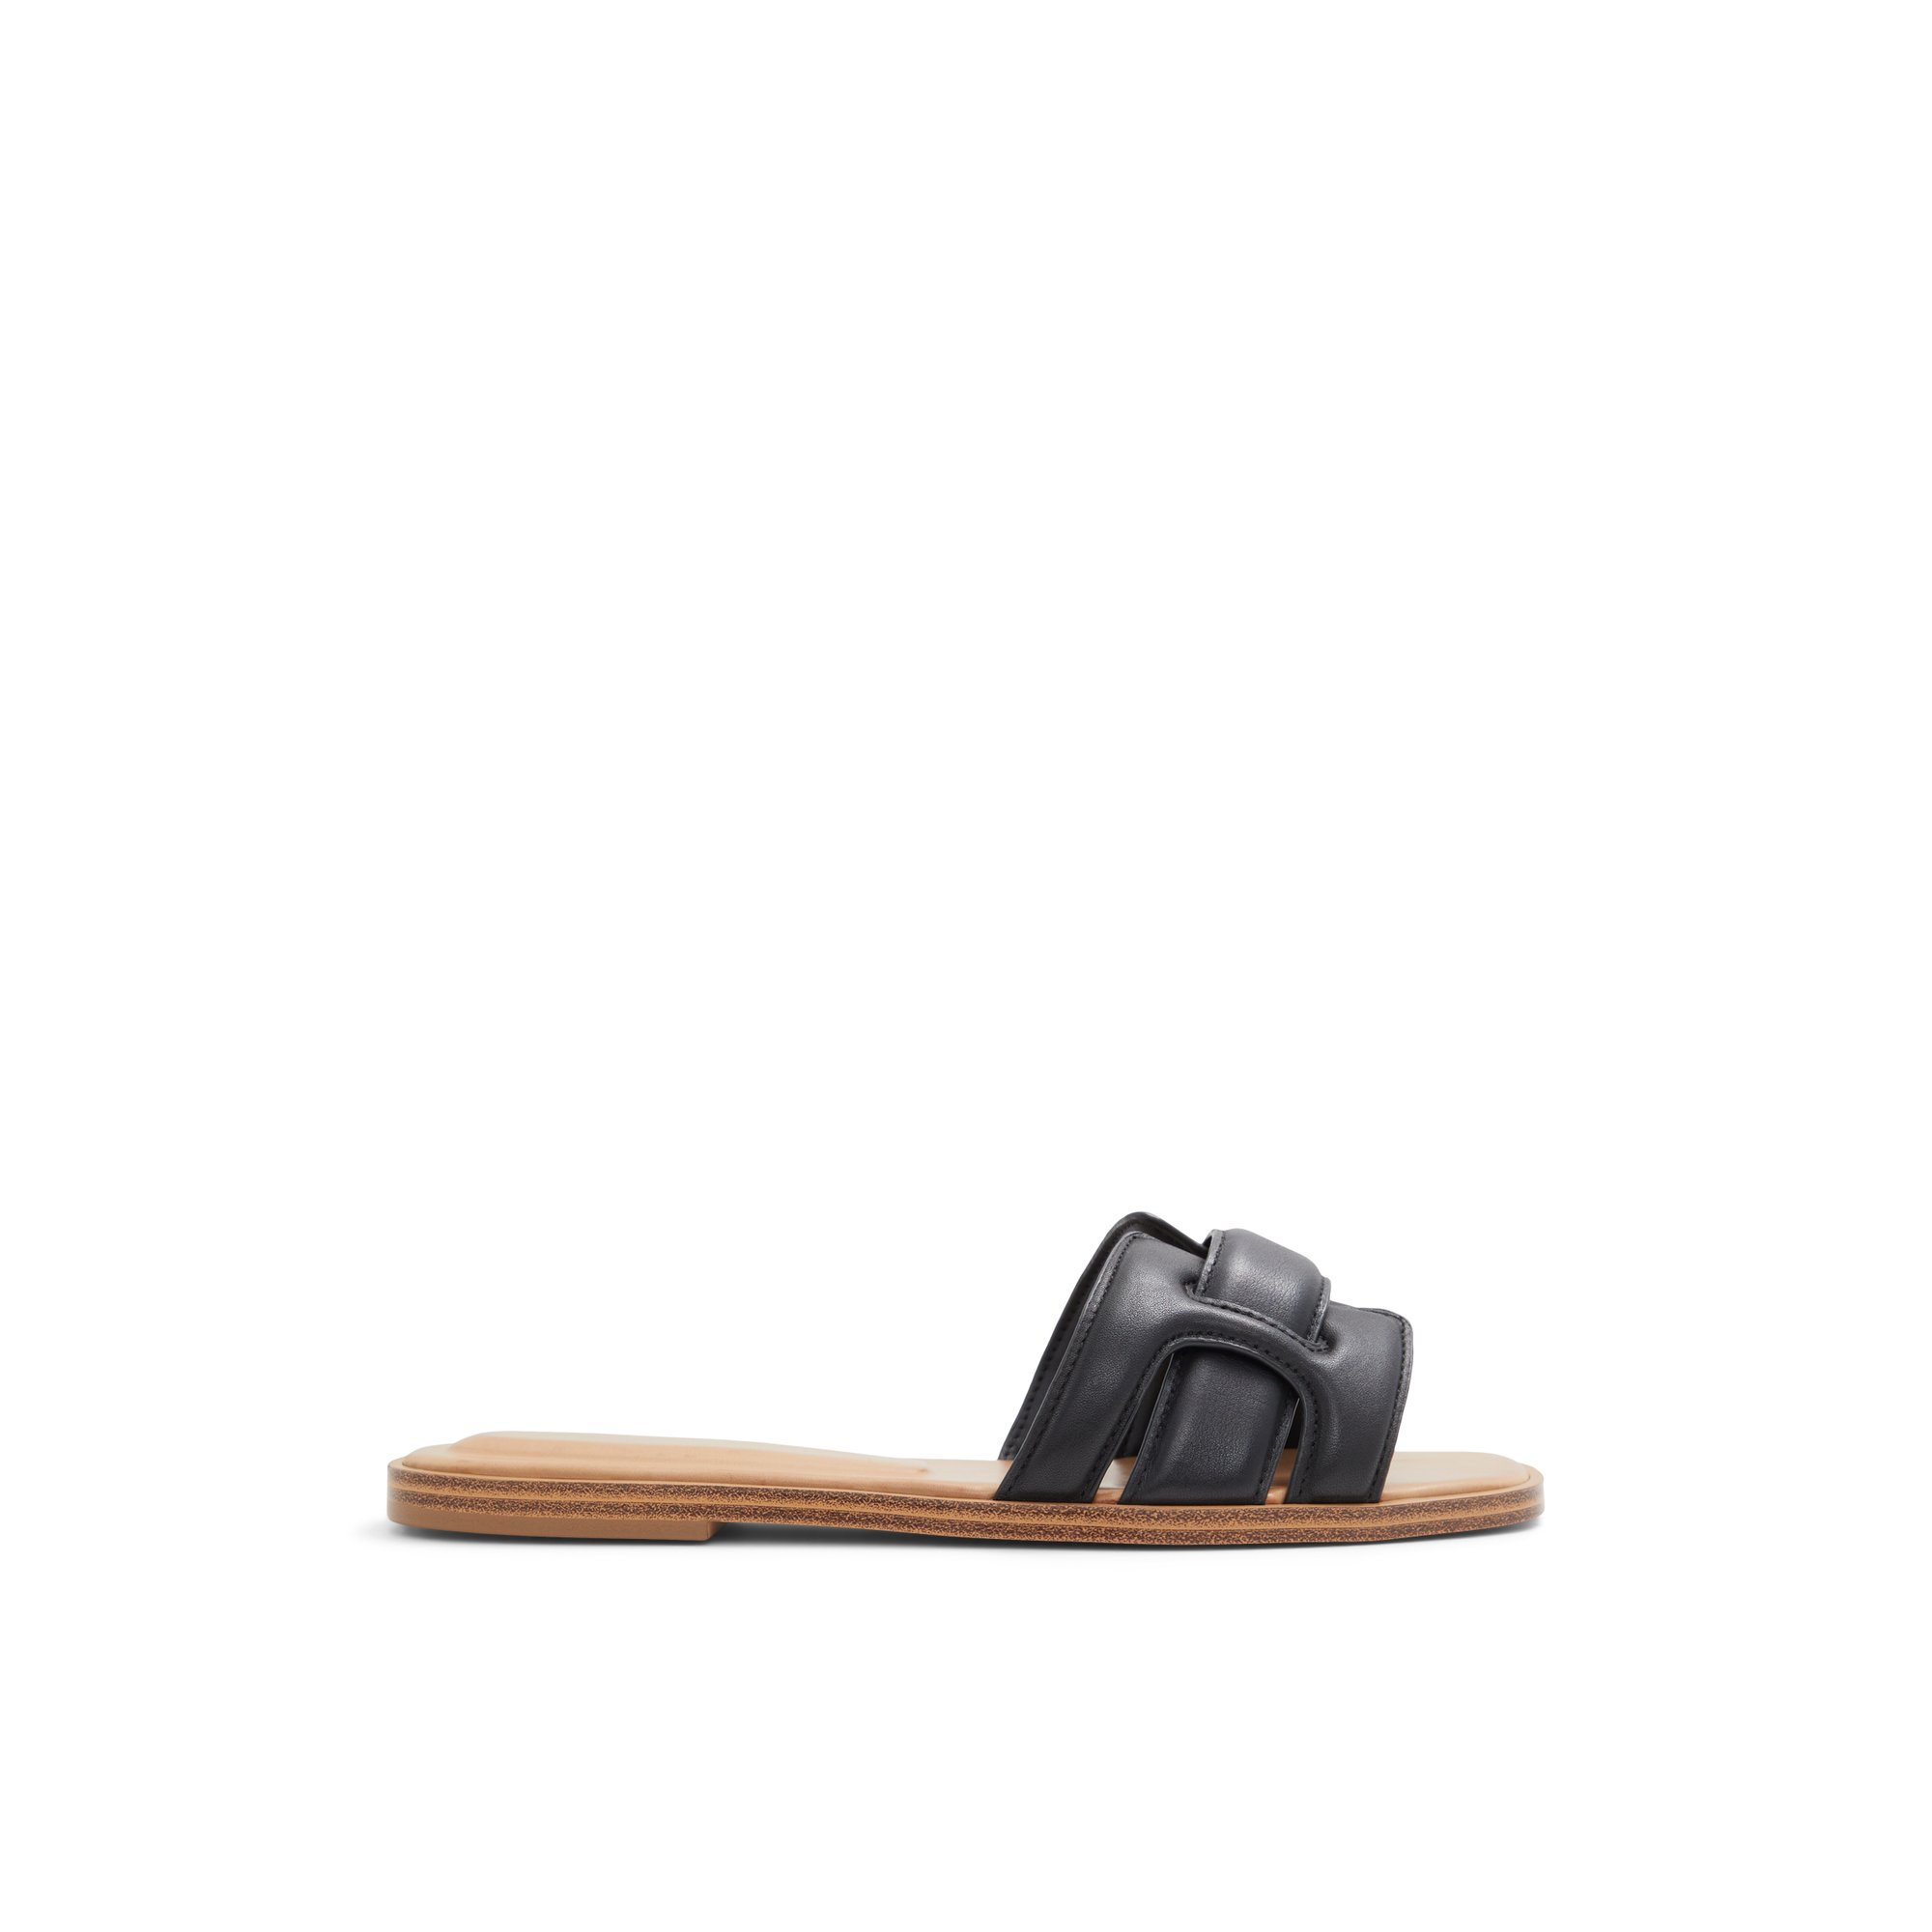 ALDO Elenaa - Women's Sandals Flats - Black